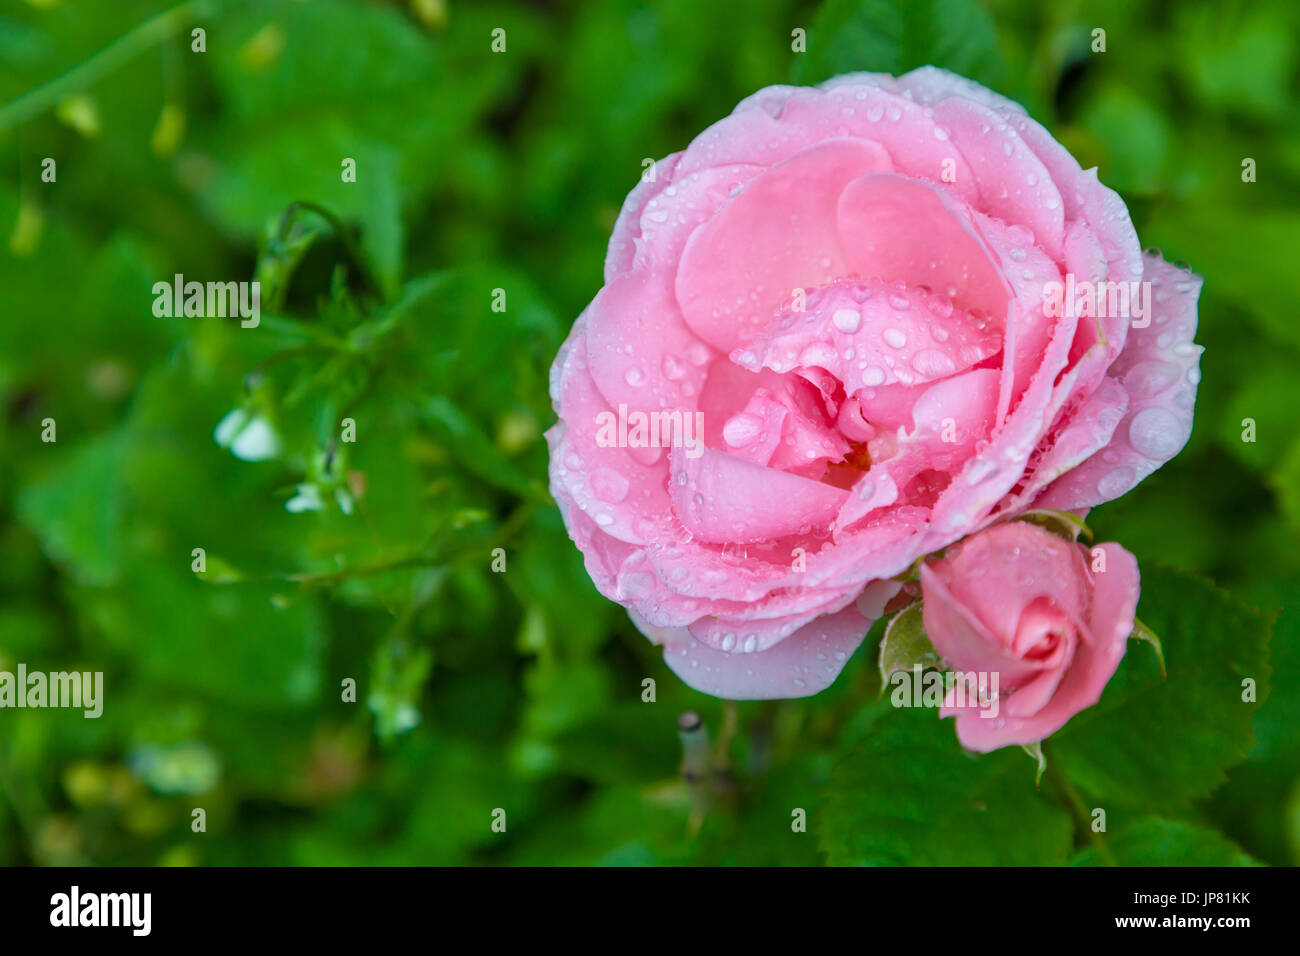 Rosa rose Blume mit vielen Knospen Stockfoto